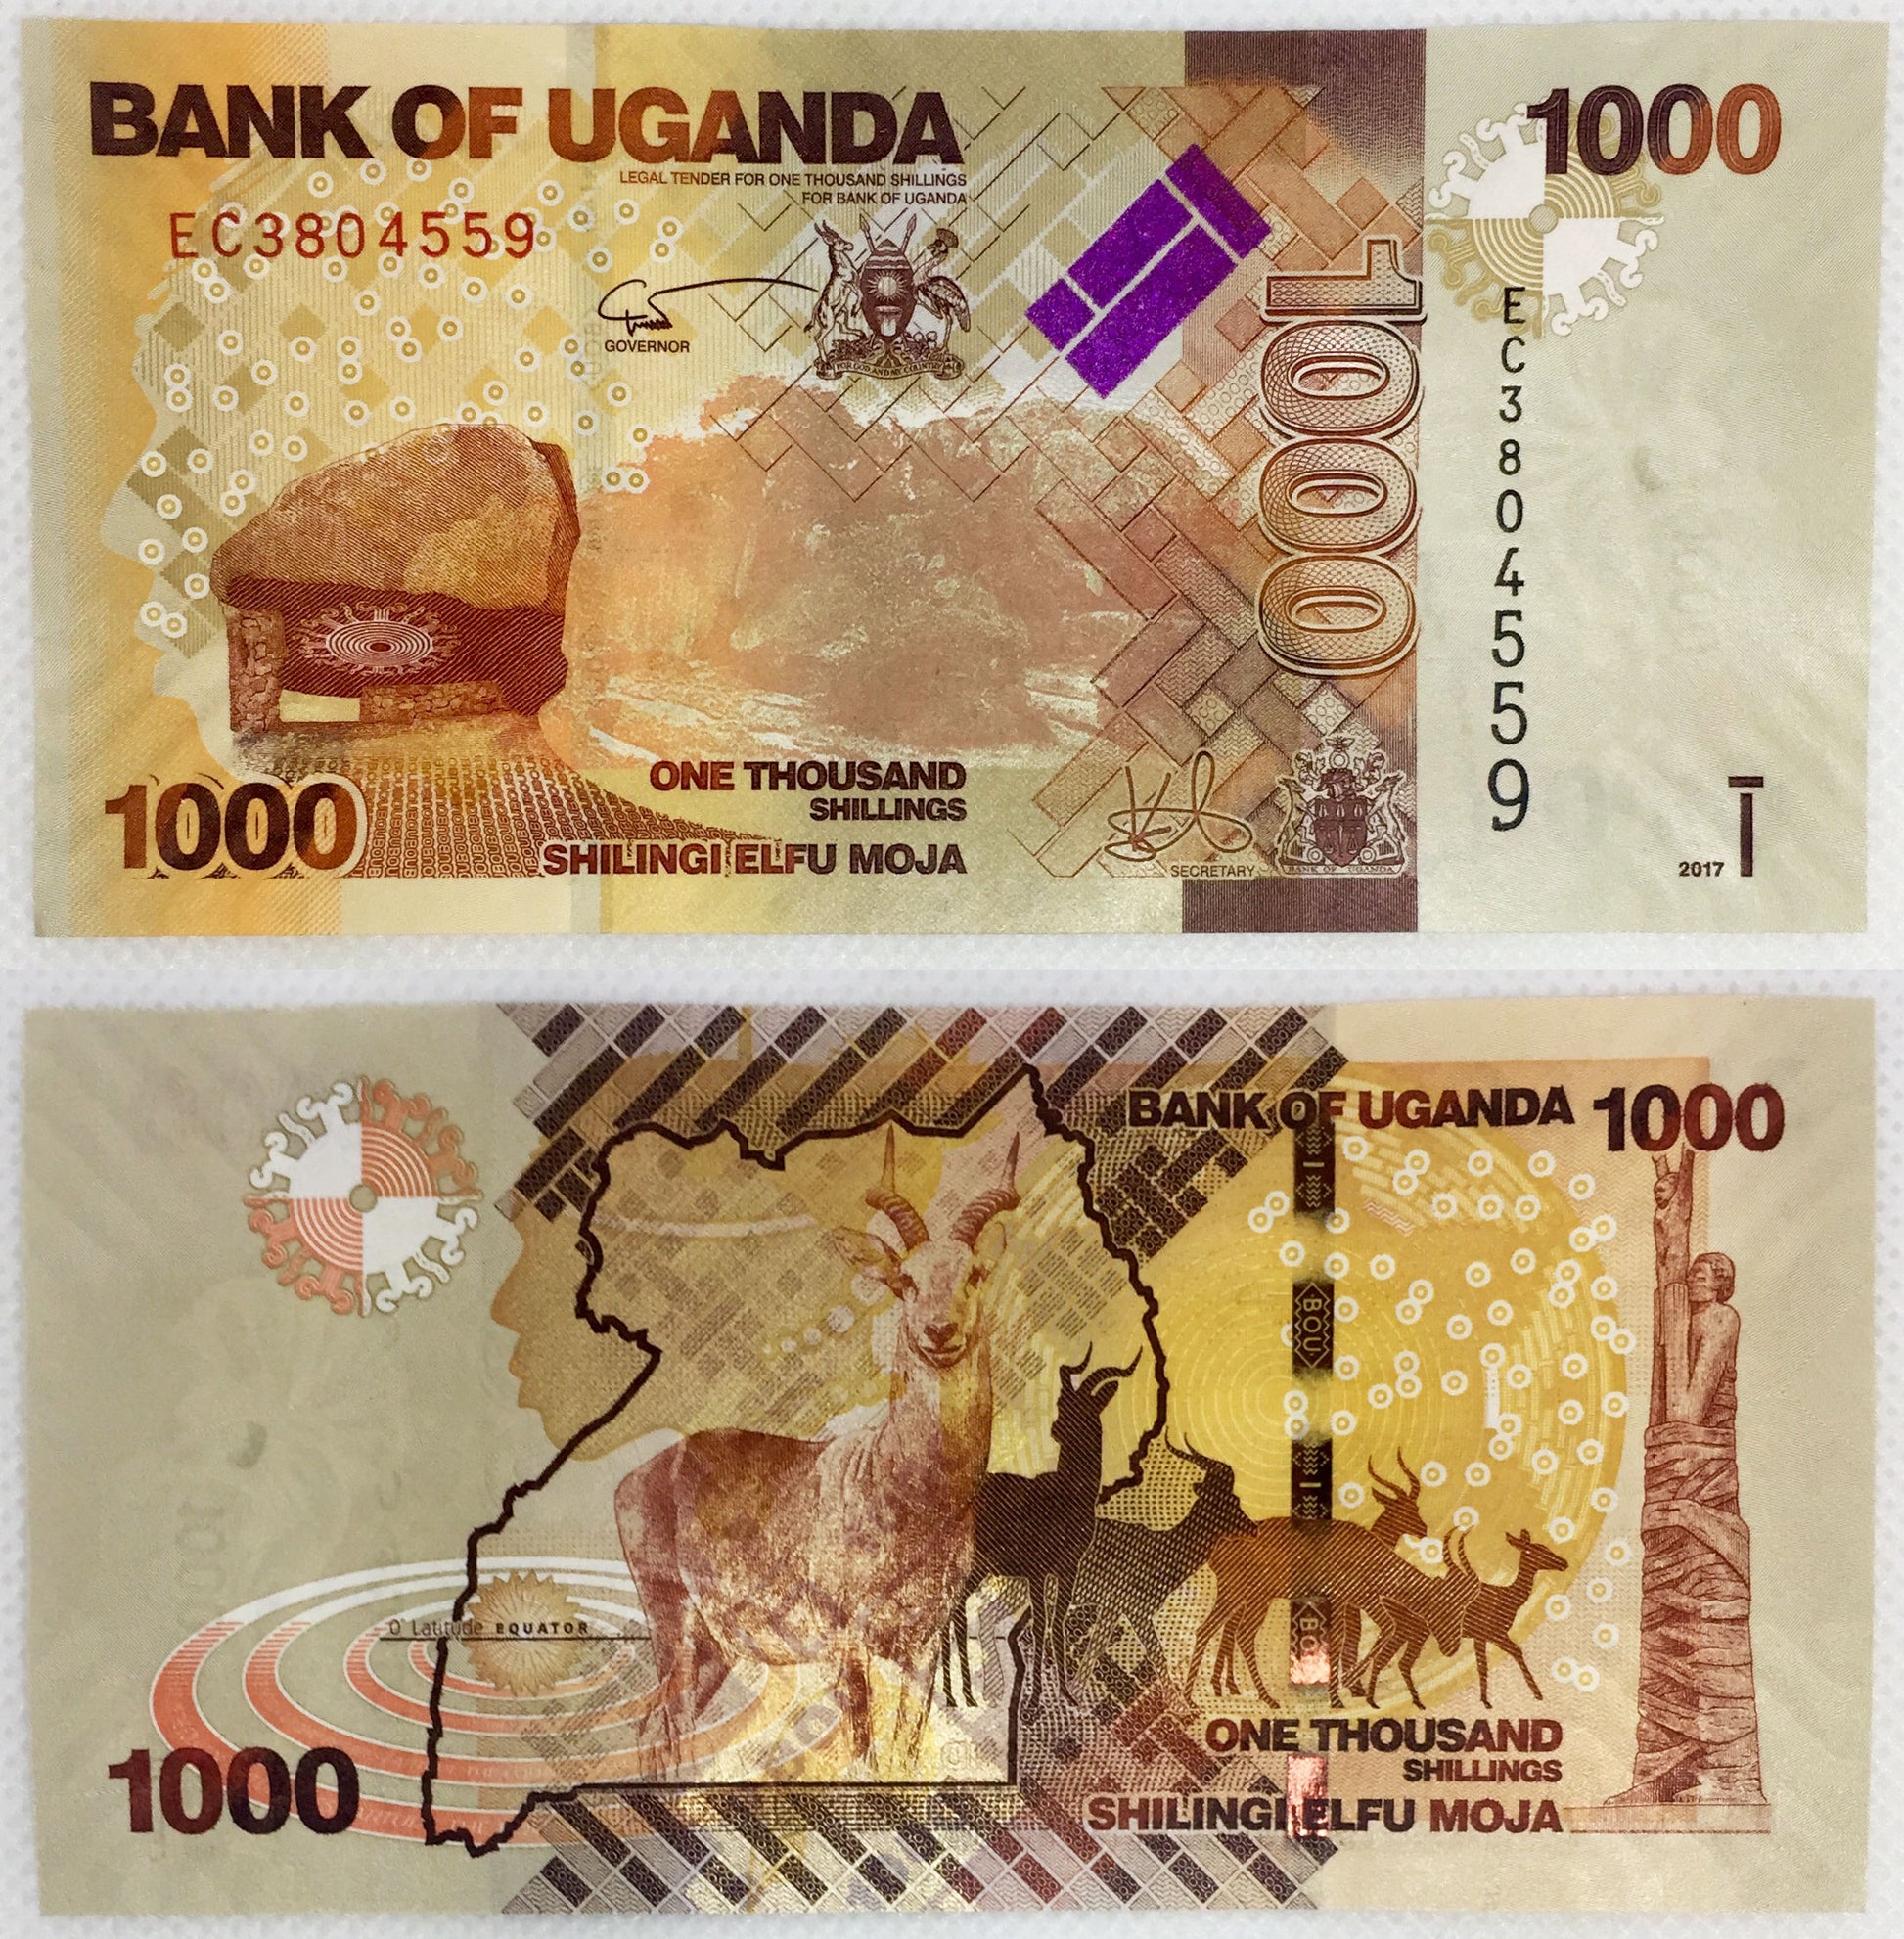 UGANDA | 1000 SHILLINGS 2017 BANKNOTE UNC